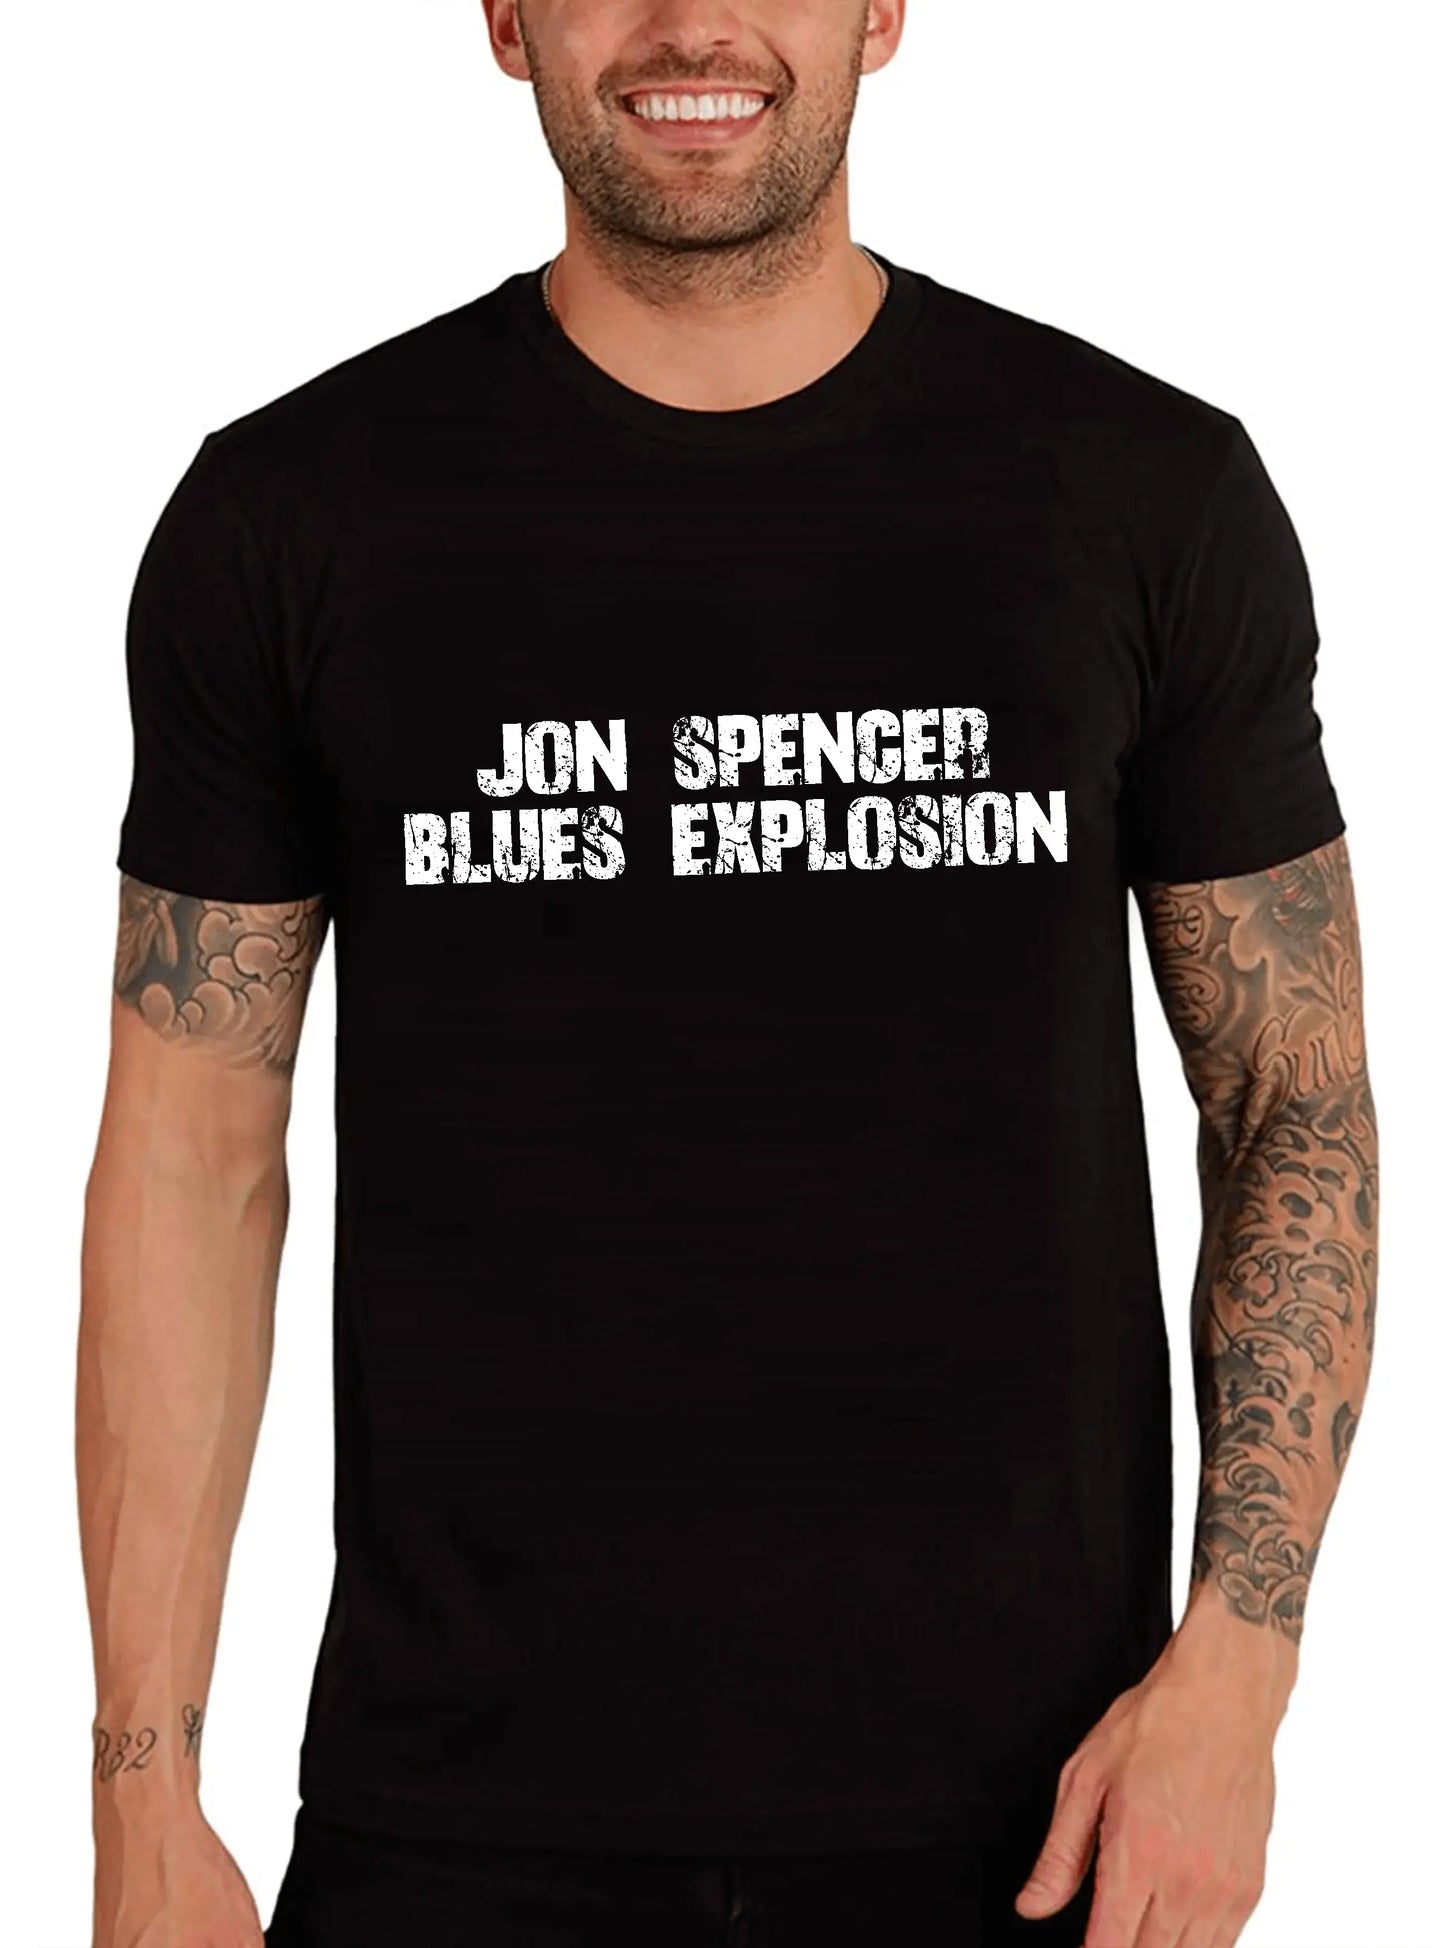 Men's Graphic T-Shirt Jon Spencer Blues Explosion Eco-Friendly Limited Edition Short Sleeve Tee-Shirt Vintage Birthday Gift Novelty